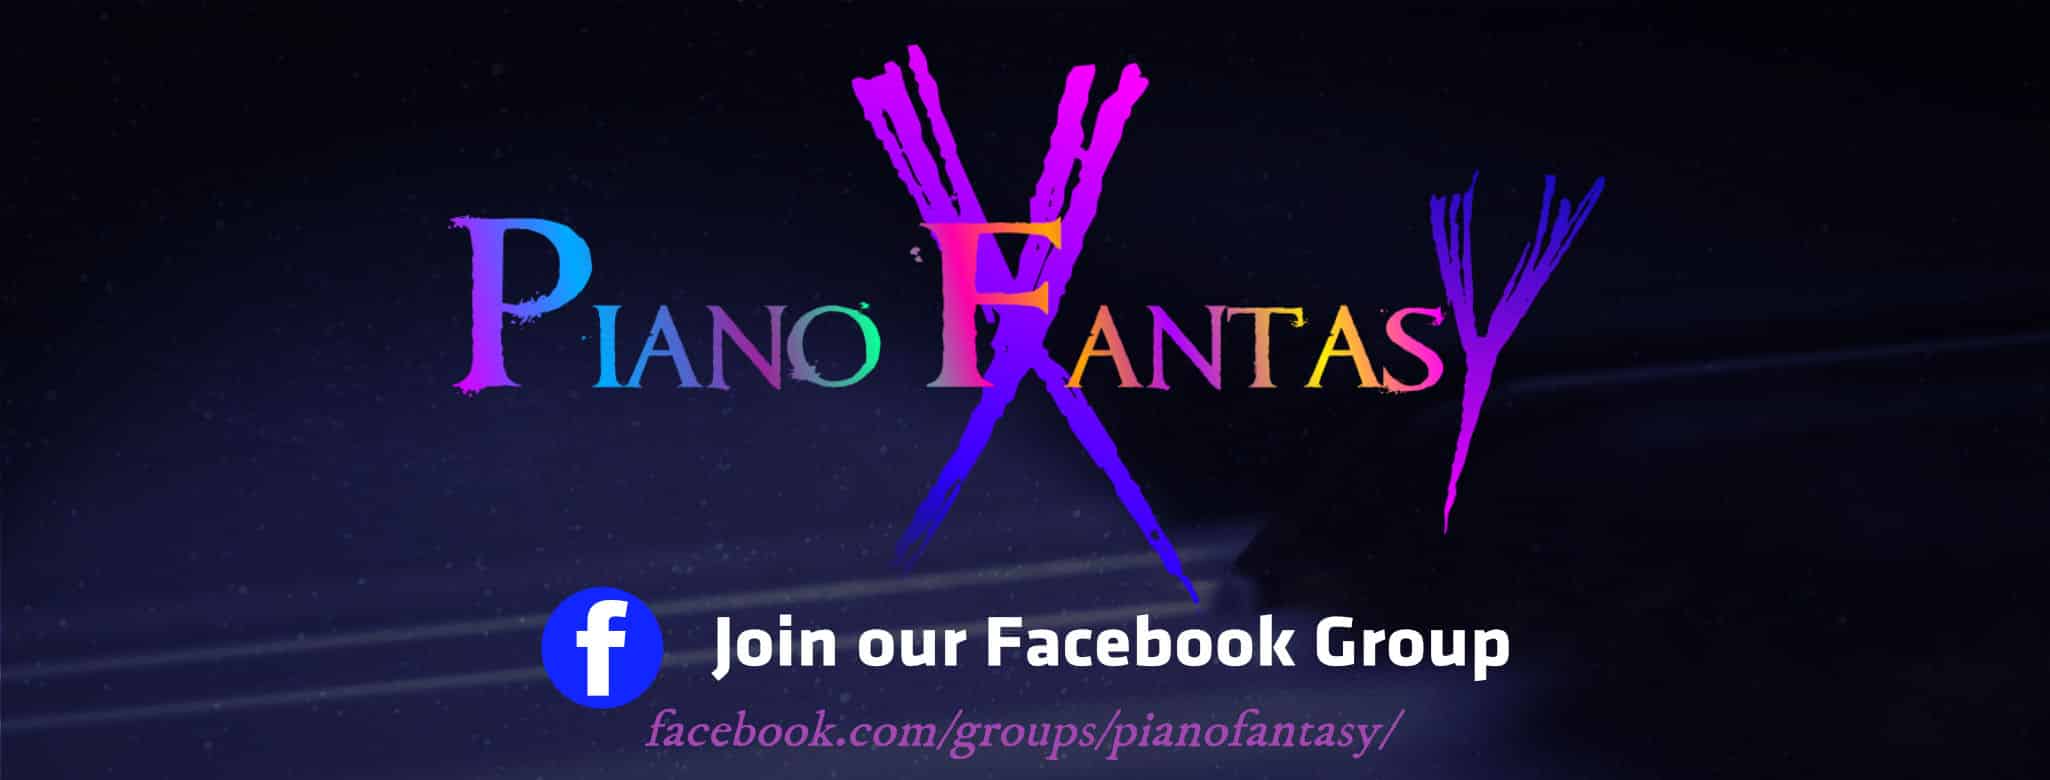 Join Facebook Group Piano Fantasy banner